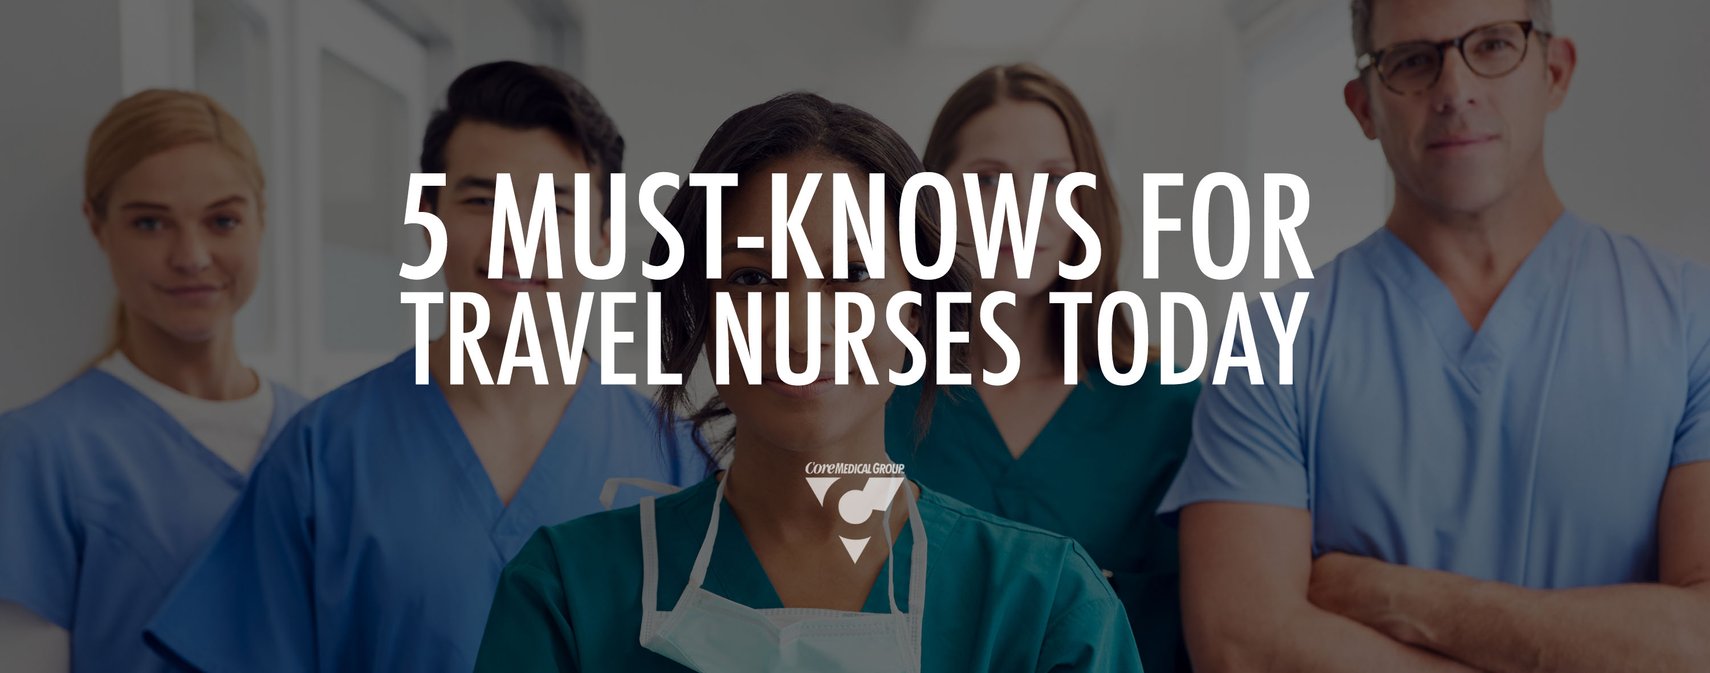 core medical group travel nursing reviews